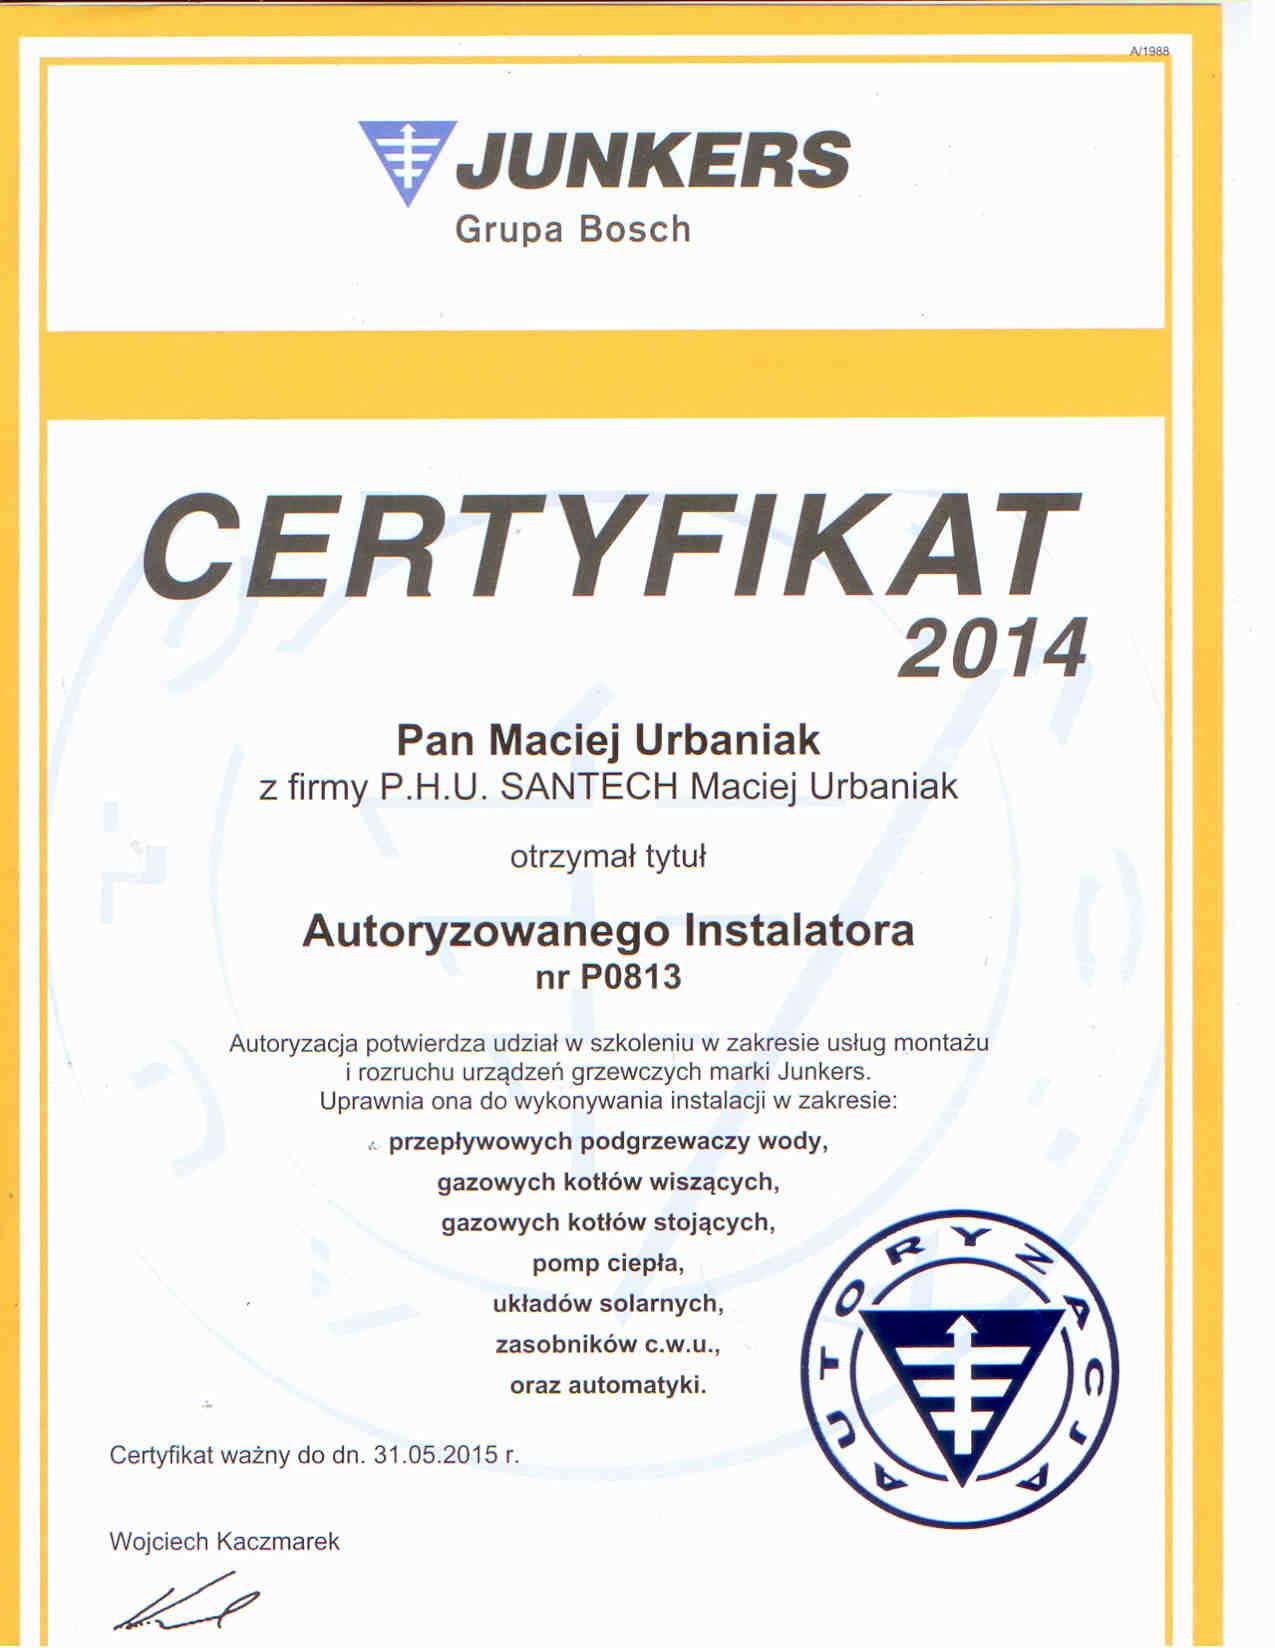 Junkers- certyfikat autoryzowanego instalatora Santech